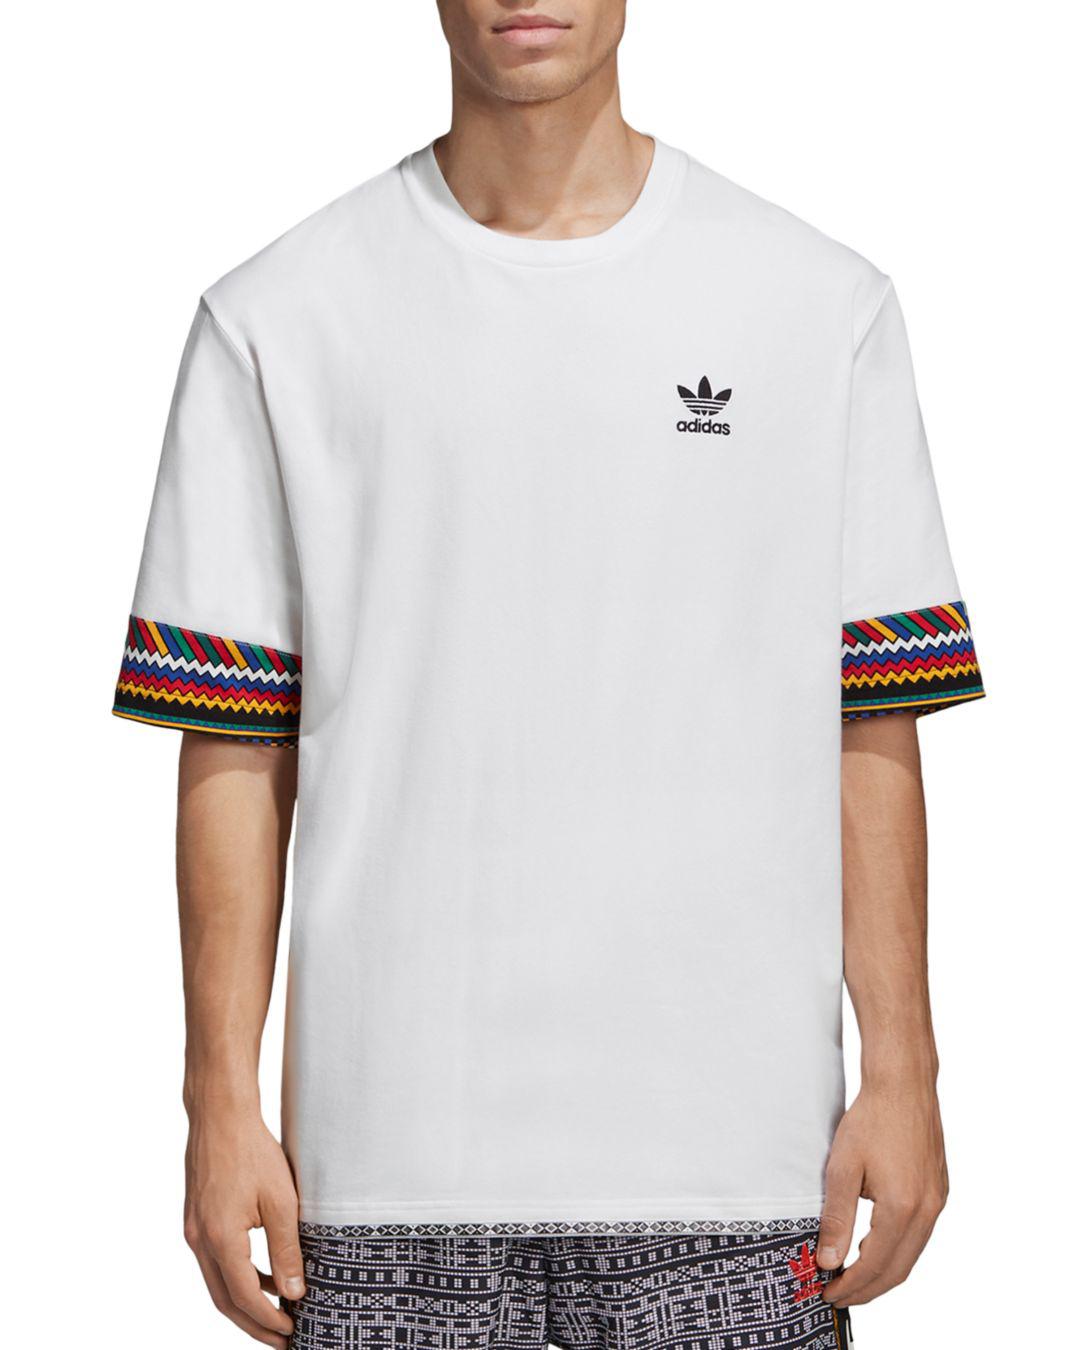 Adidas Pharrell Williams T Shirt Flash Sales, 53% OFF | ilikepinga.com